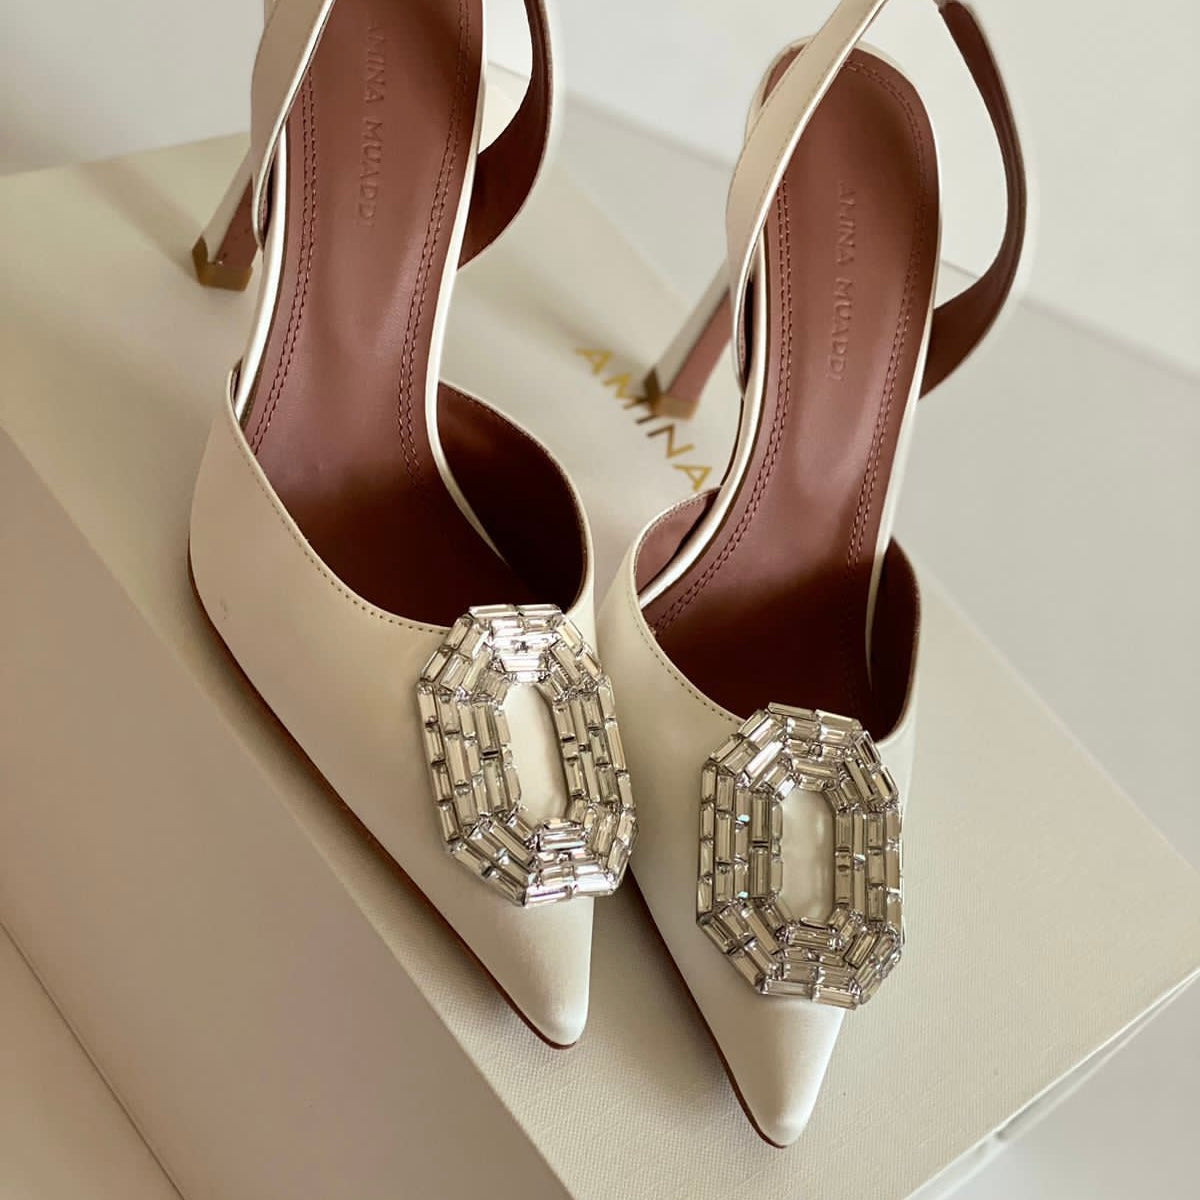 Amina Muaddi Style #2 Shoes